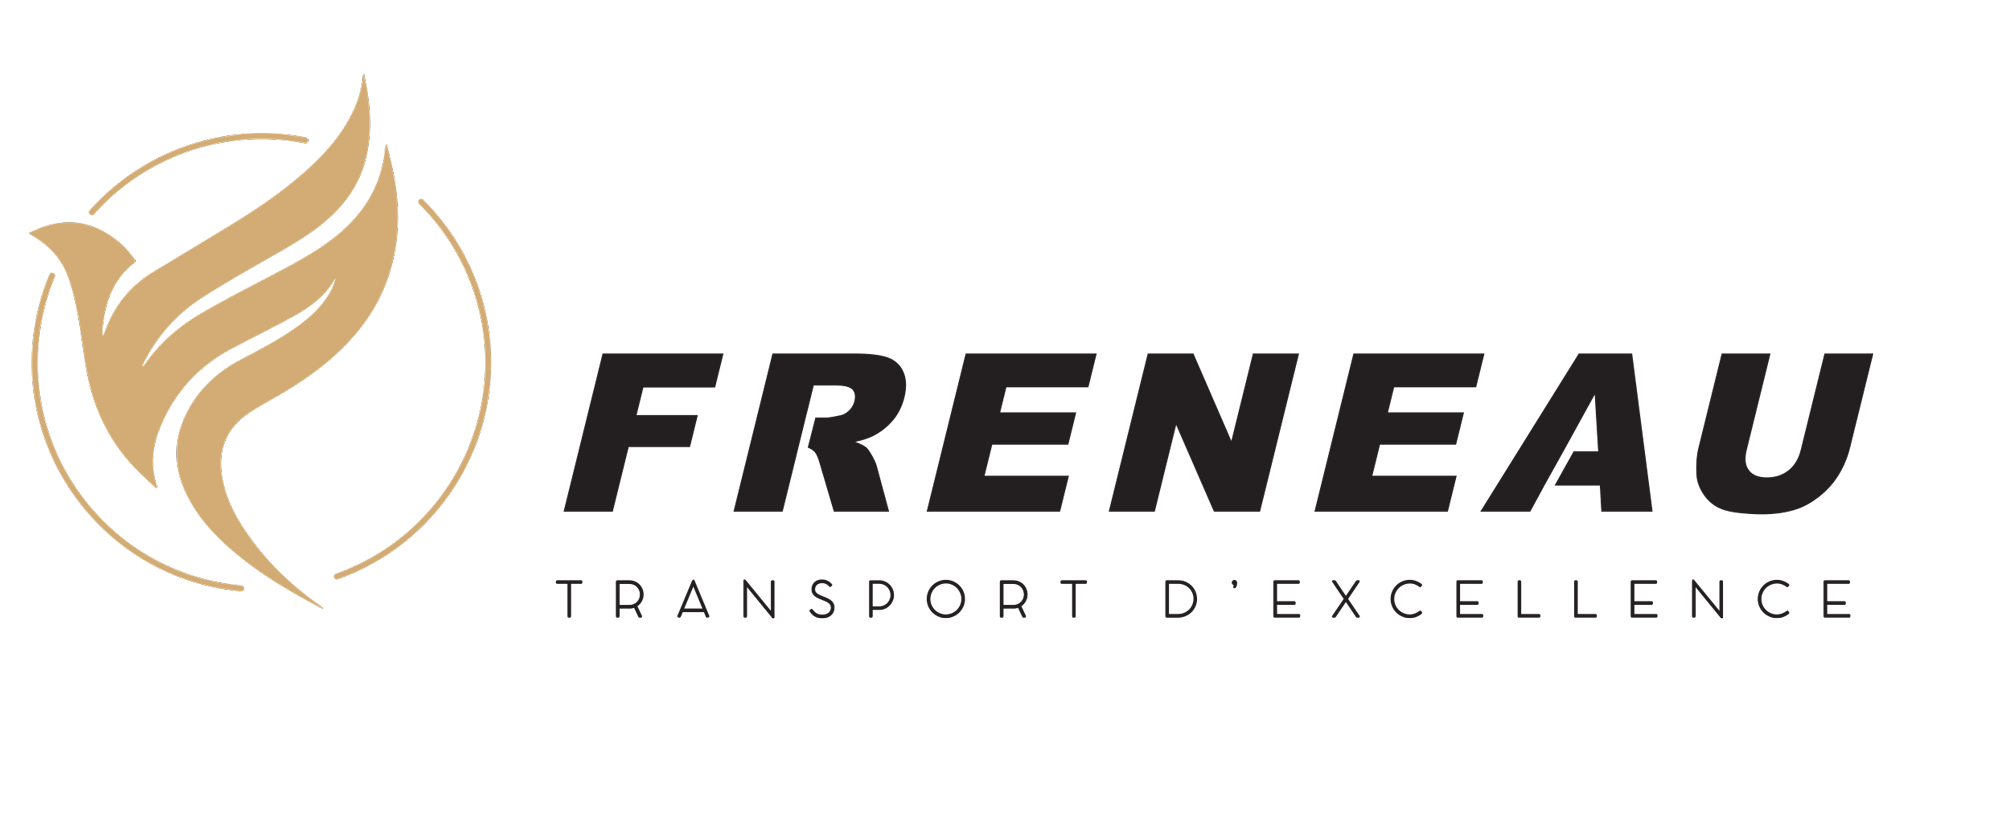 TRANSPORTS FRENEAU